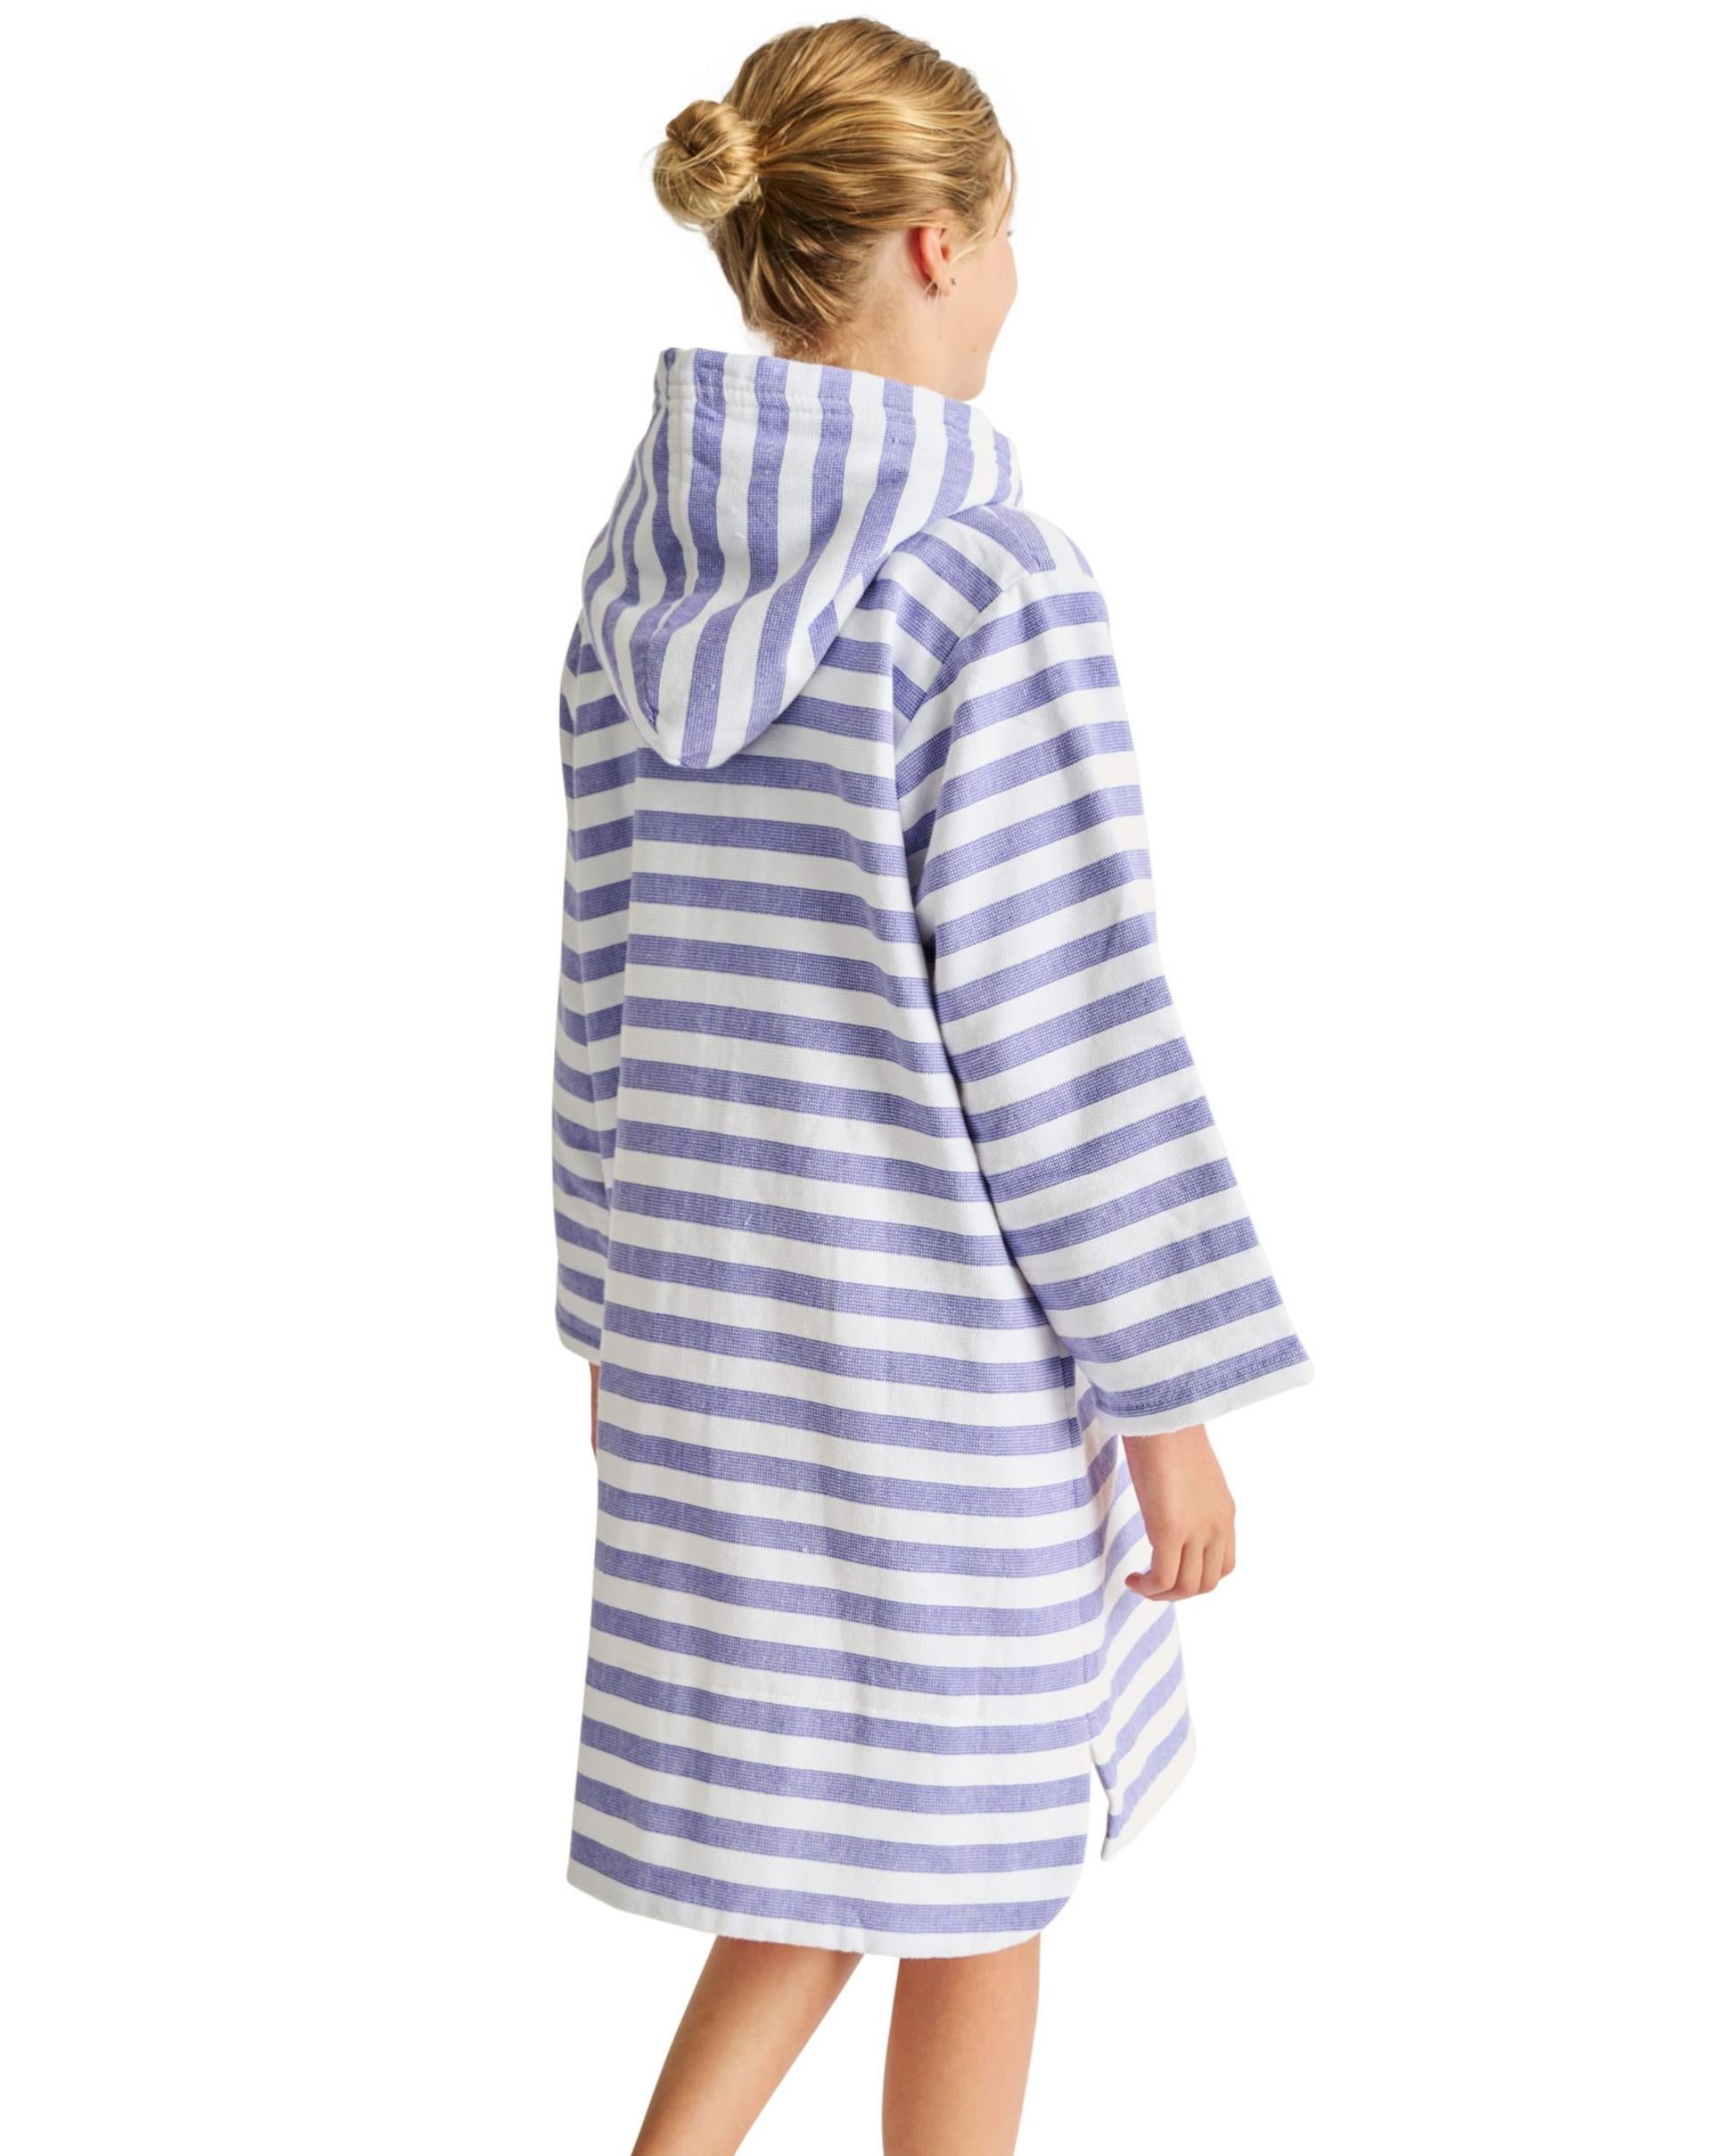 MENORCA Kids Terry Hooded Towel: Purple/White